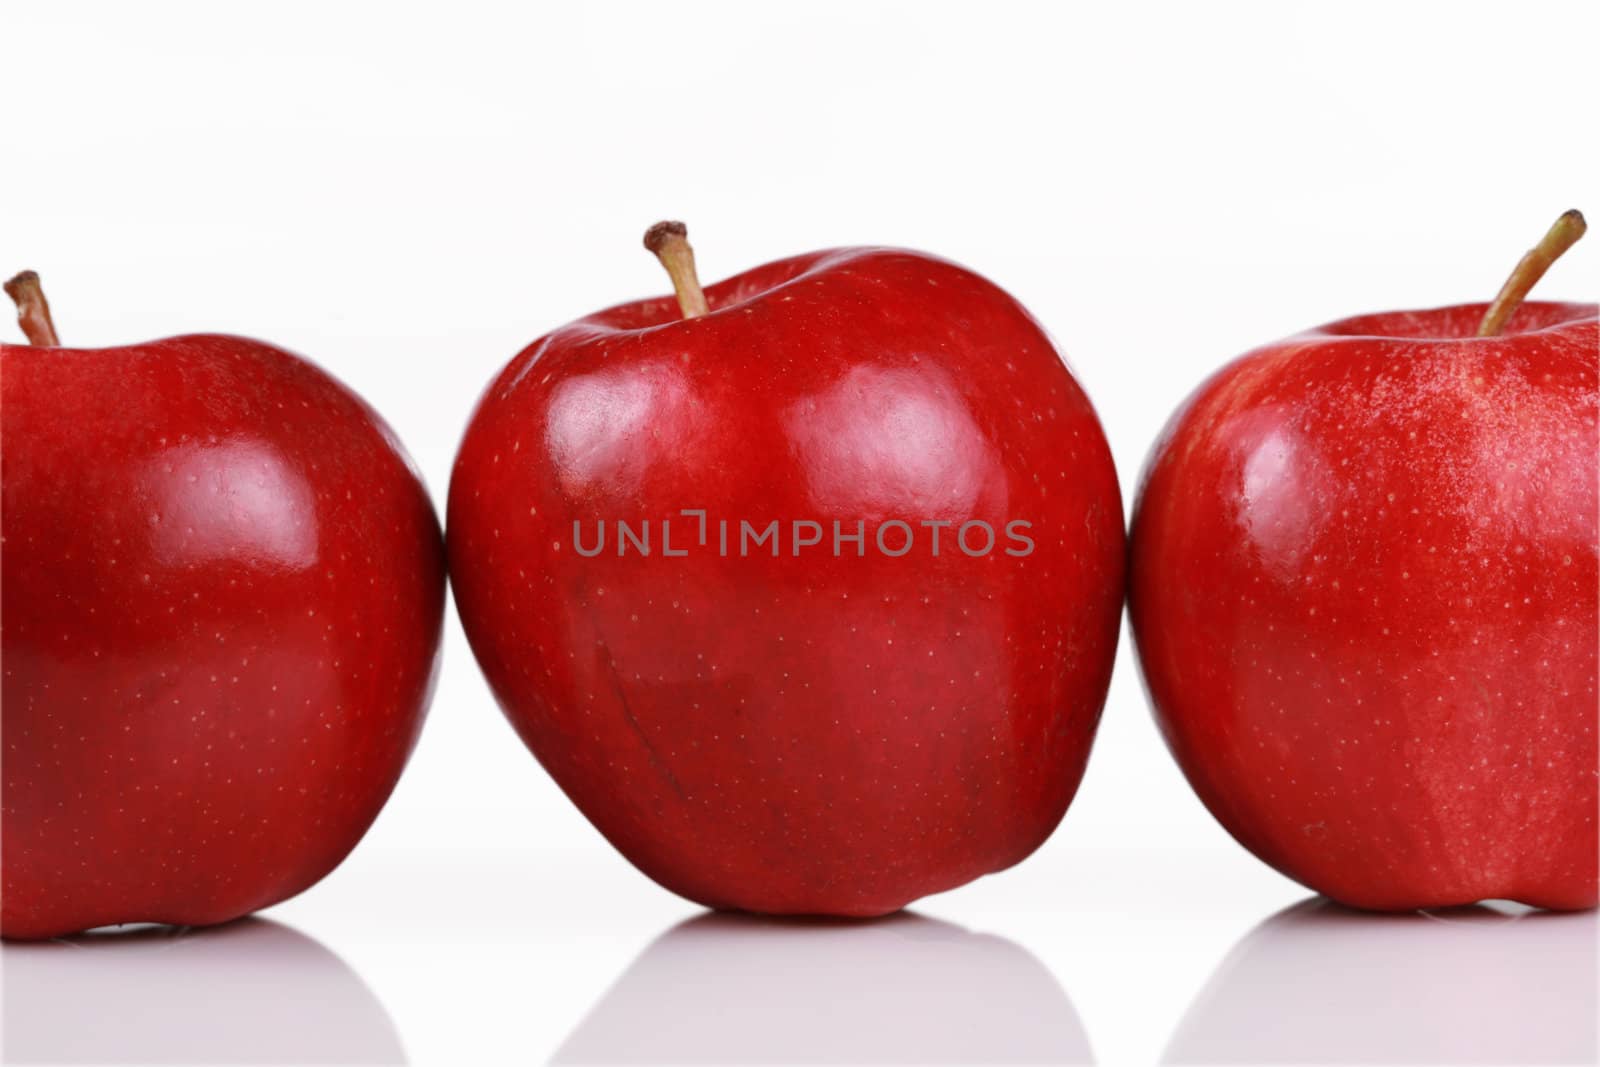 Three shiny red apples by jarenwicklund